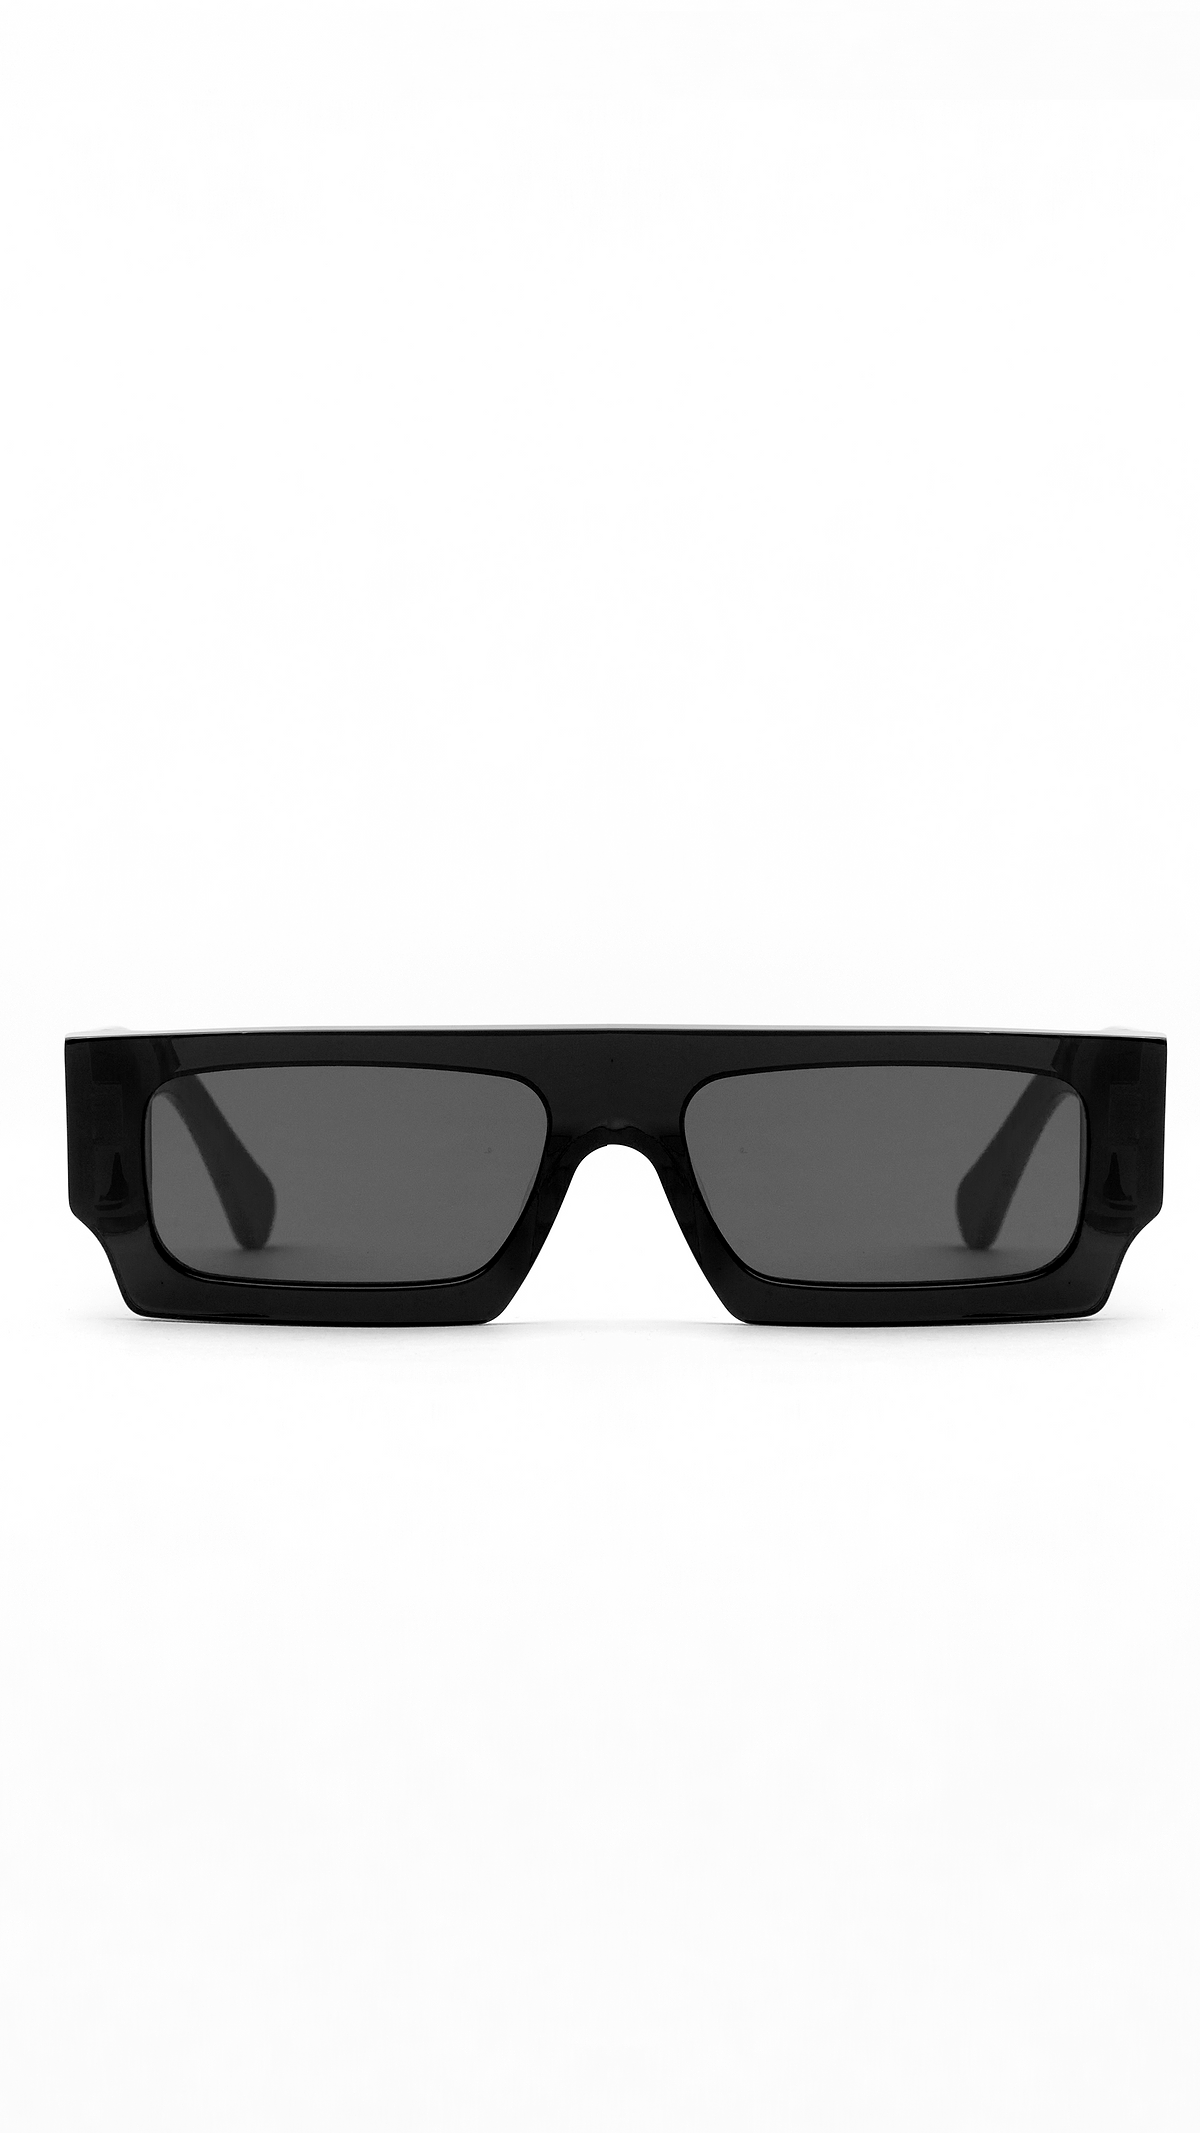 Ashluxe Pixel Sunglasses Black